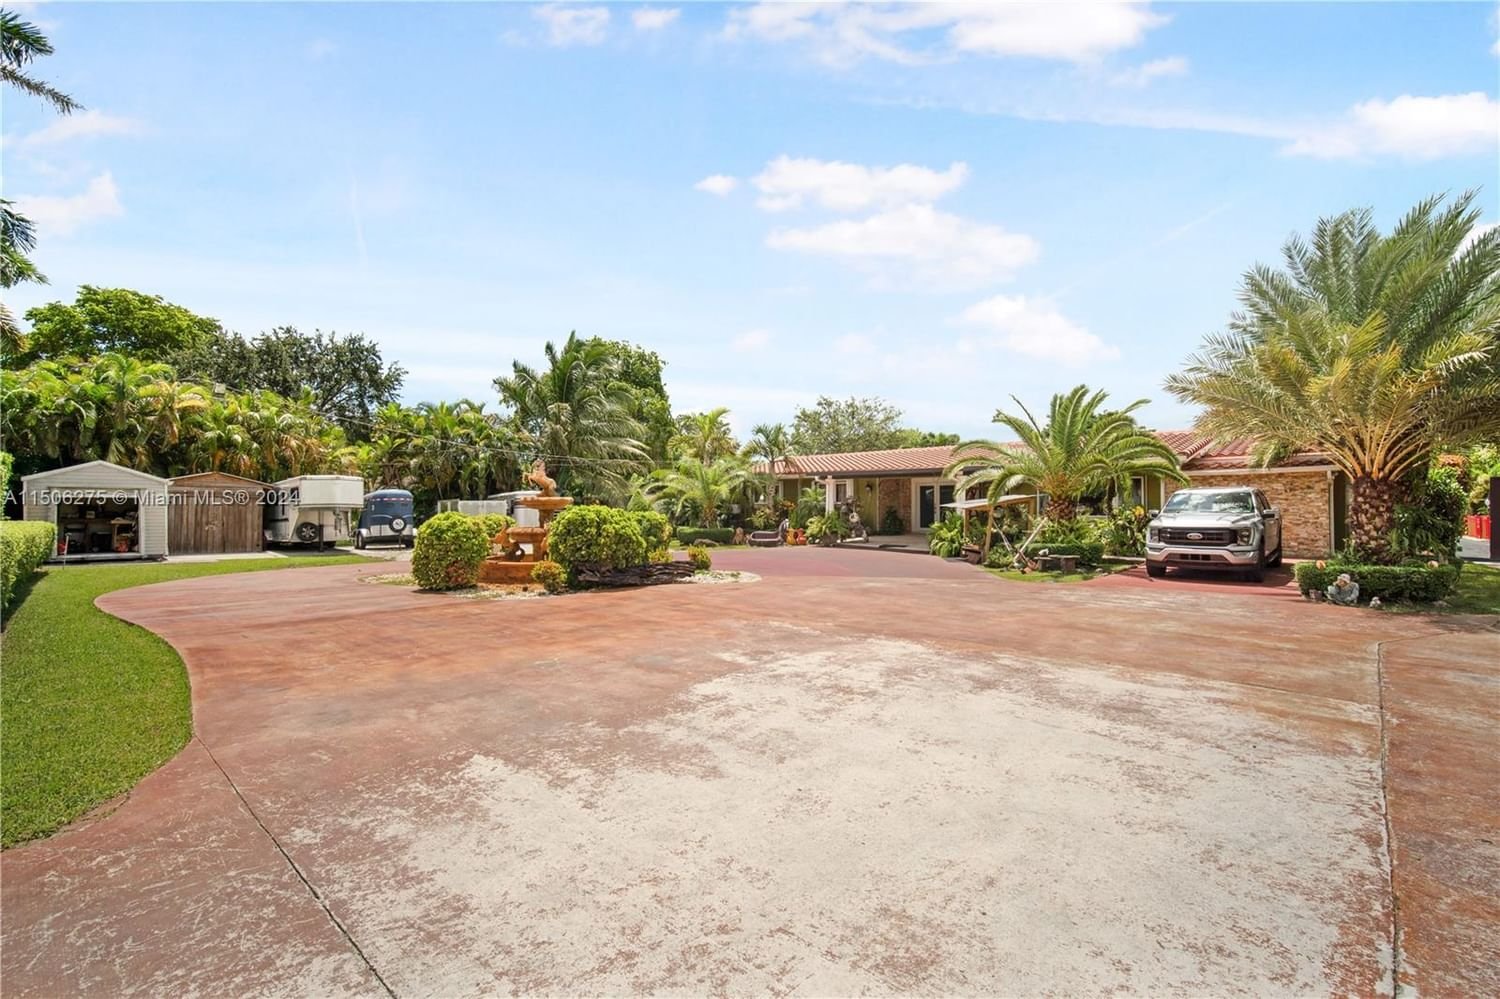 Real estate property located at 12600 45th St, Miami-Dade County, BIRD ROAD FARMSITES, Miami, FL